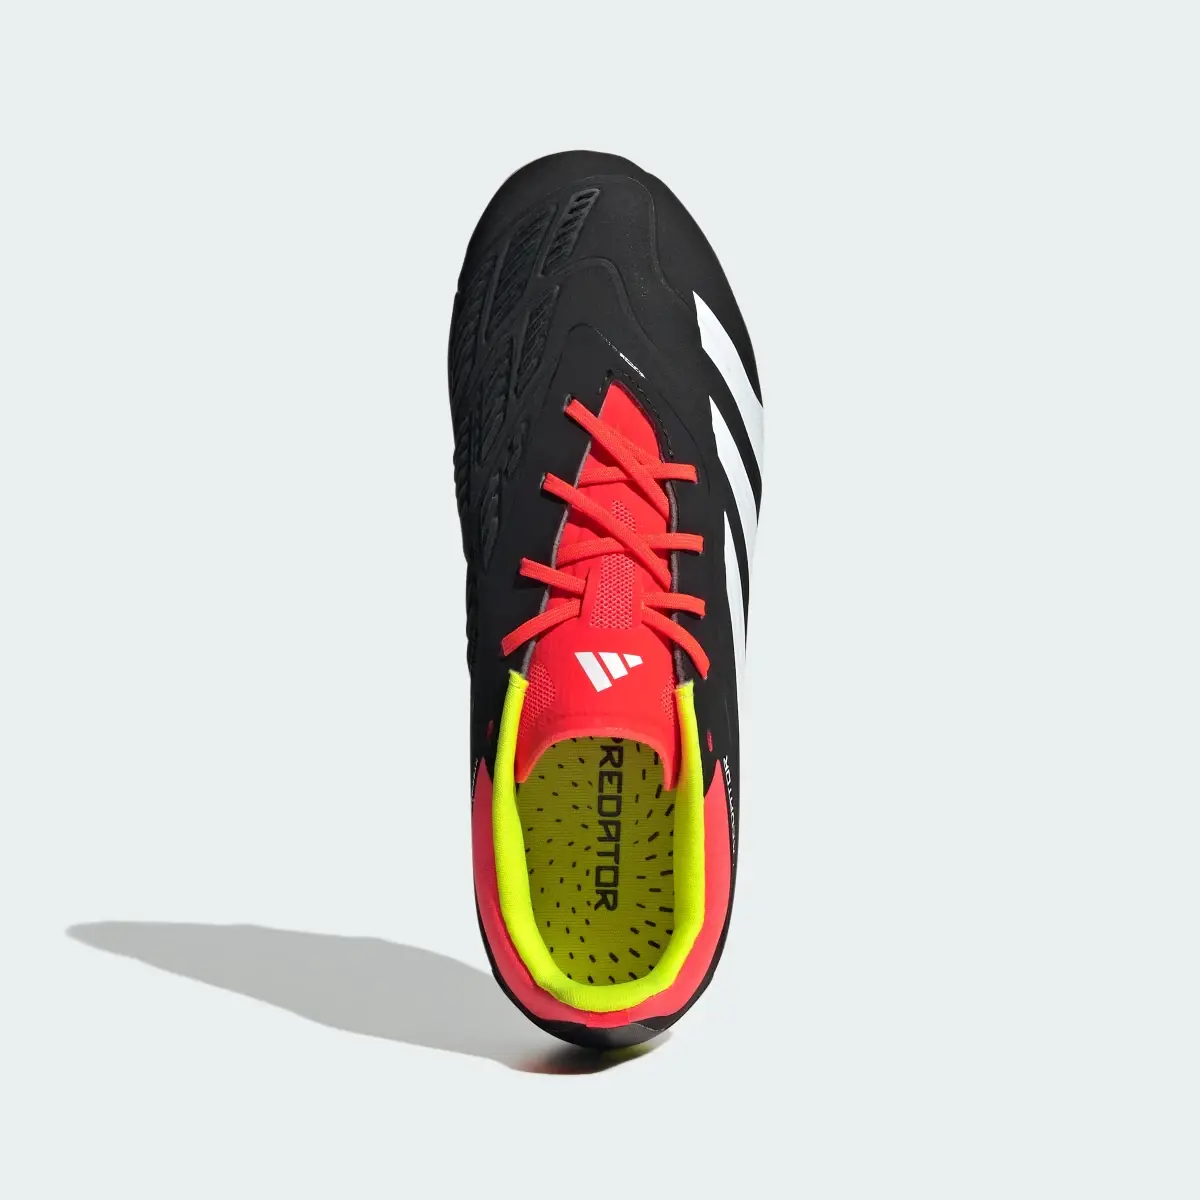 Adidas Predator Elite Firm Ground Football Boots. 3